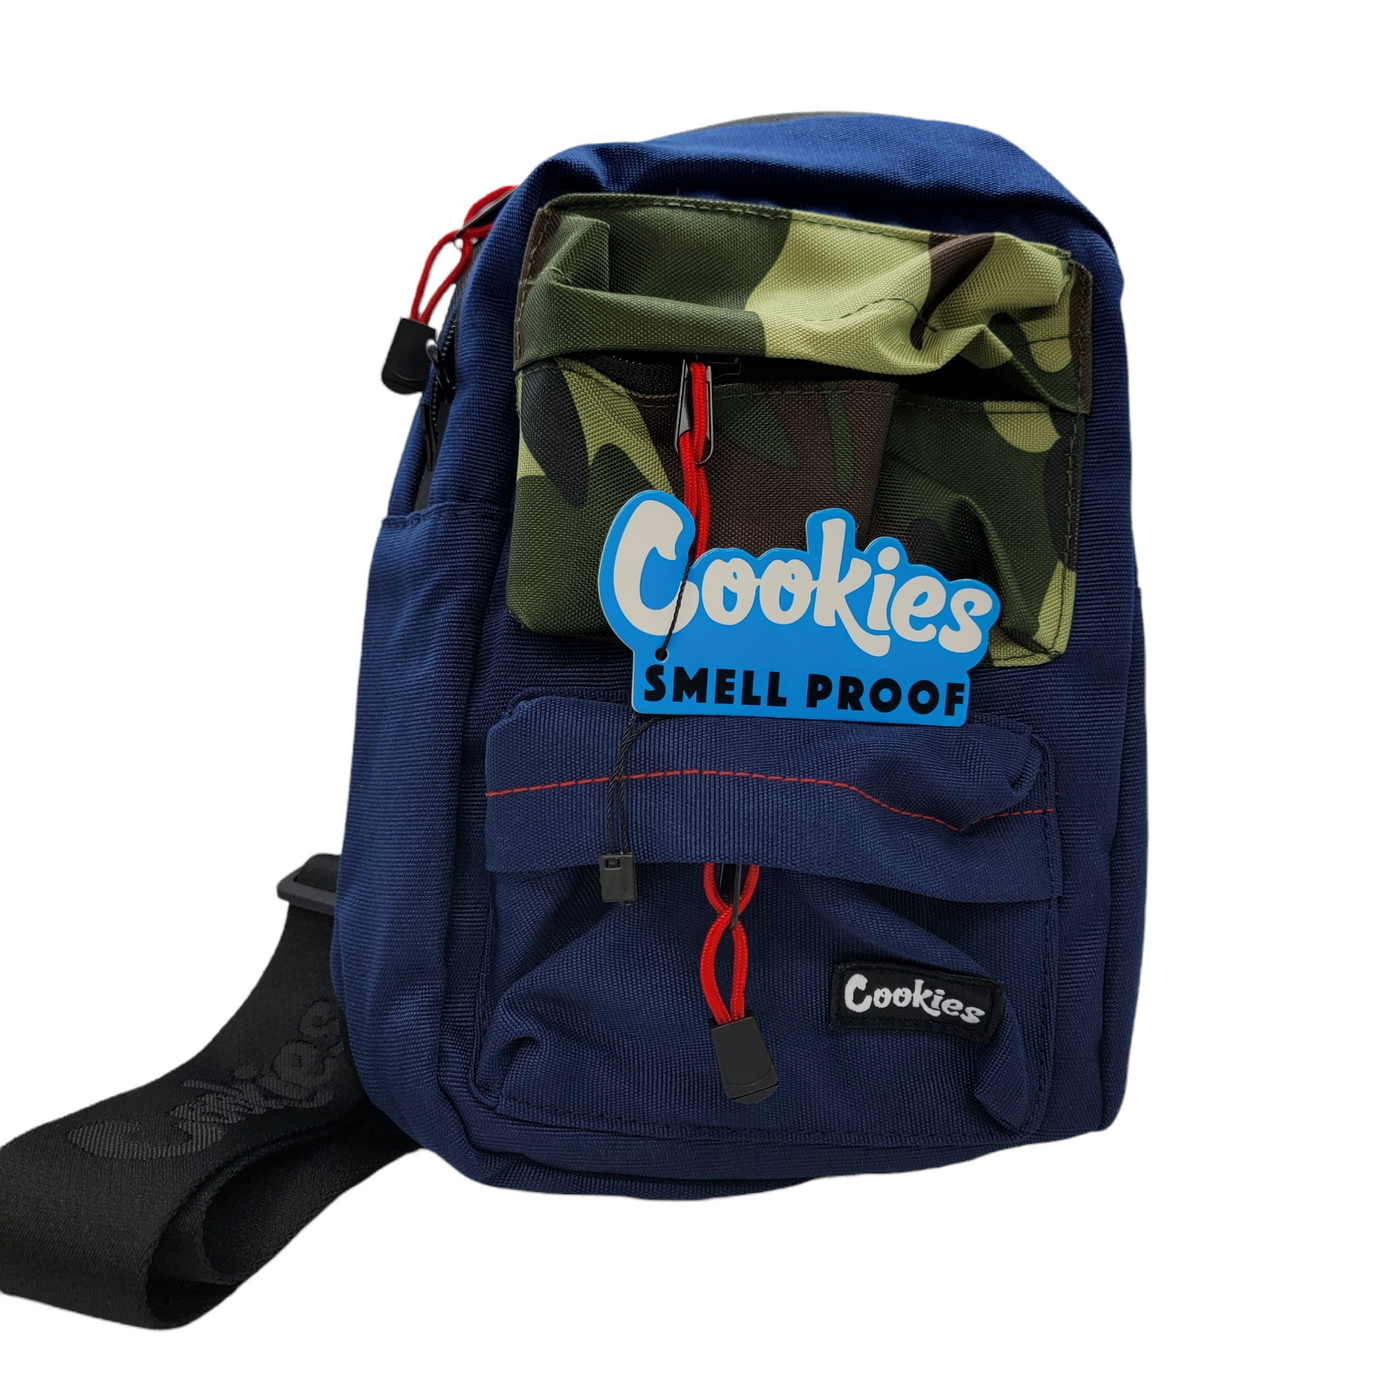 Cookies Smell Proof "Rack Pack" Over The Shoulder Sling Bag Navy